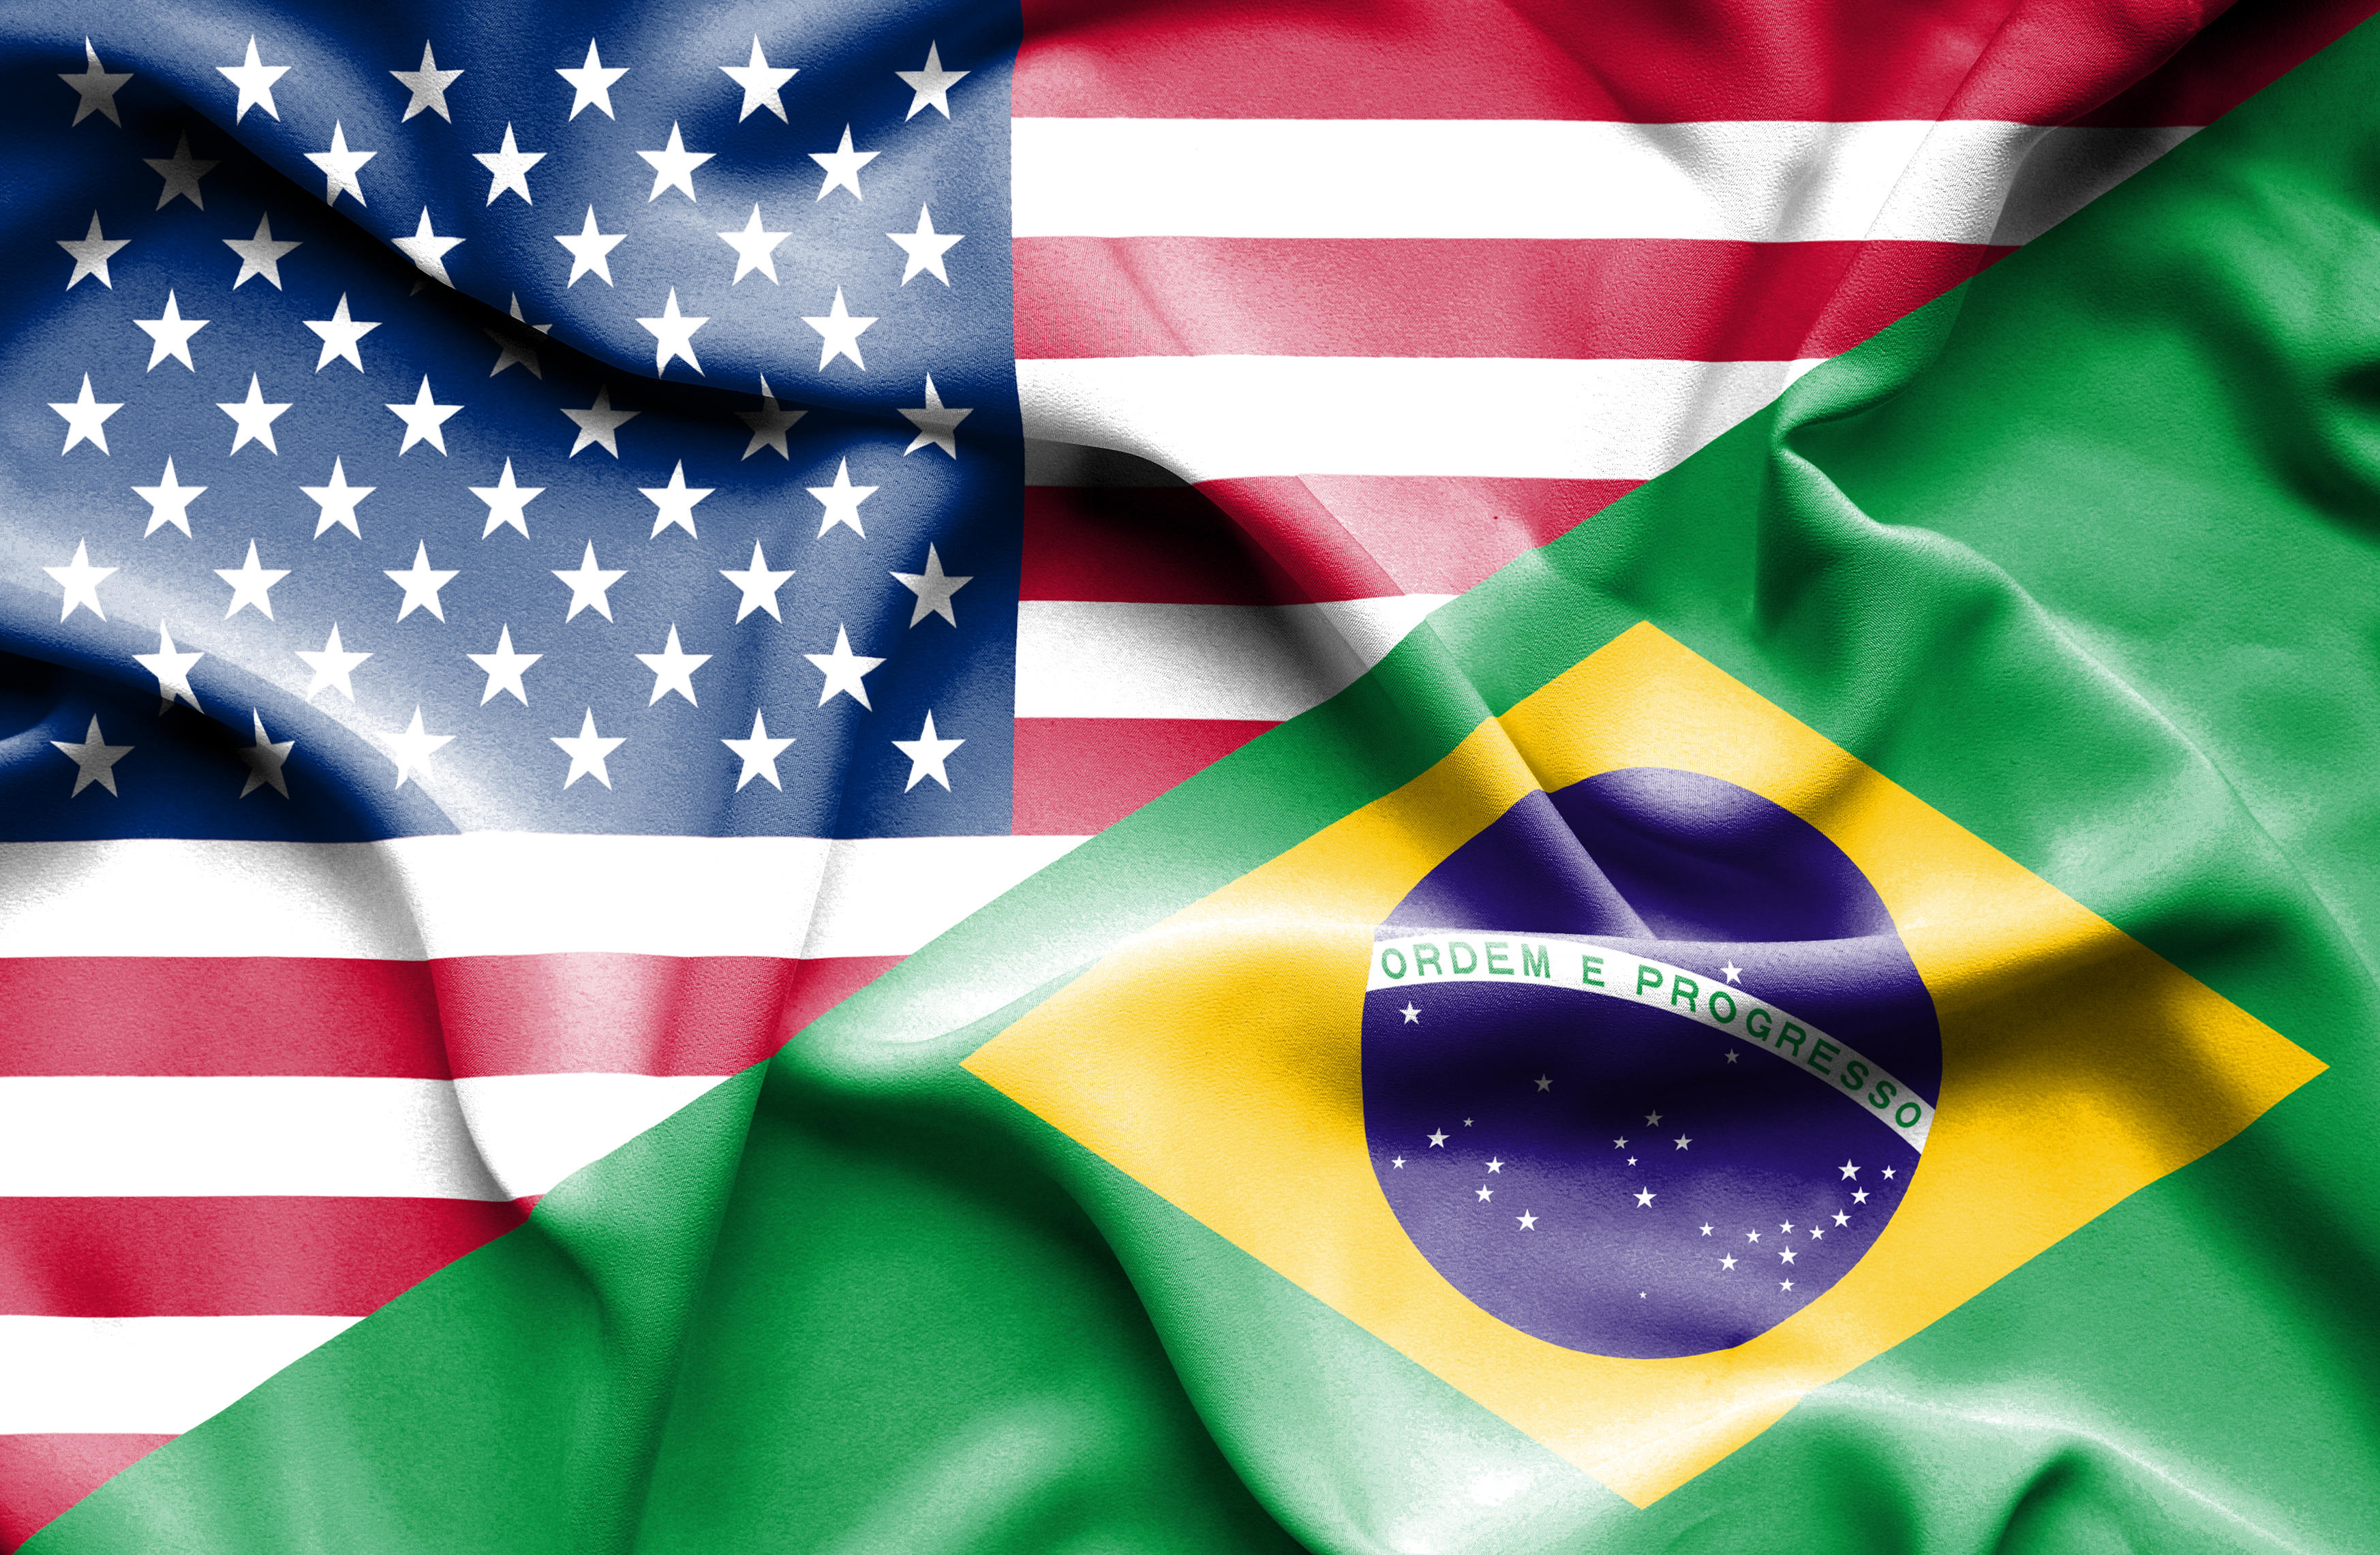 Corte da Selic diminui diferencial de juros entre Brasil e EUA: é